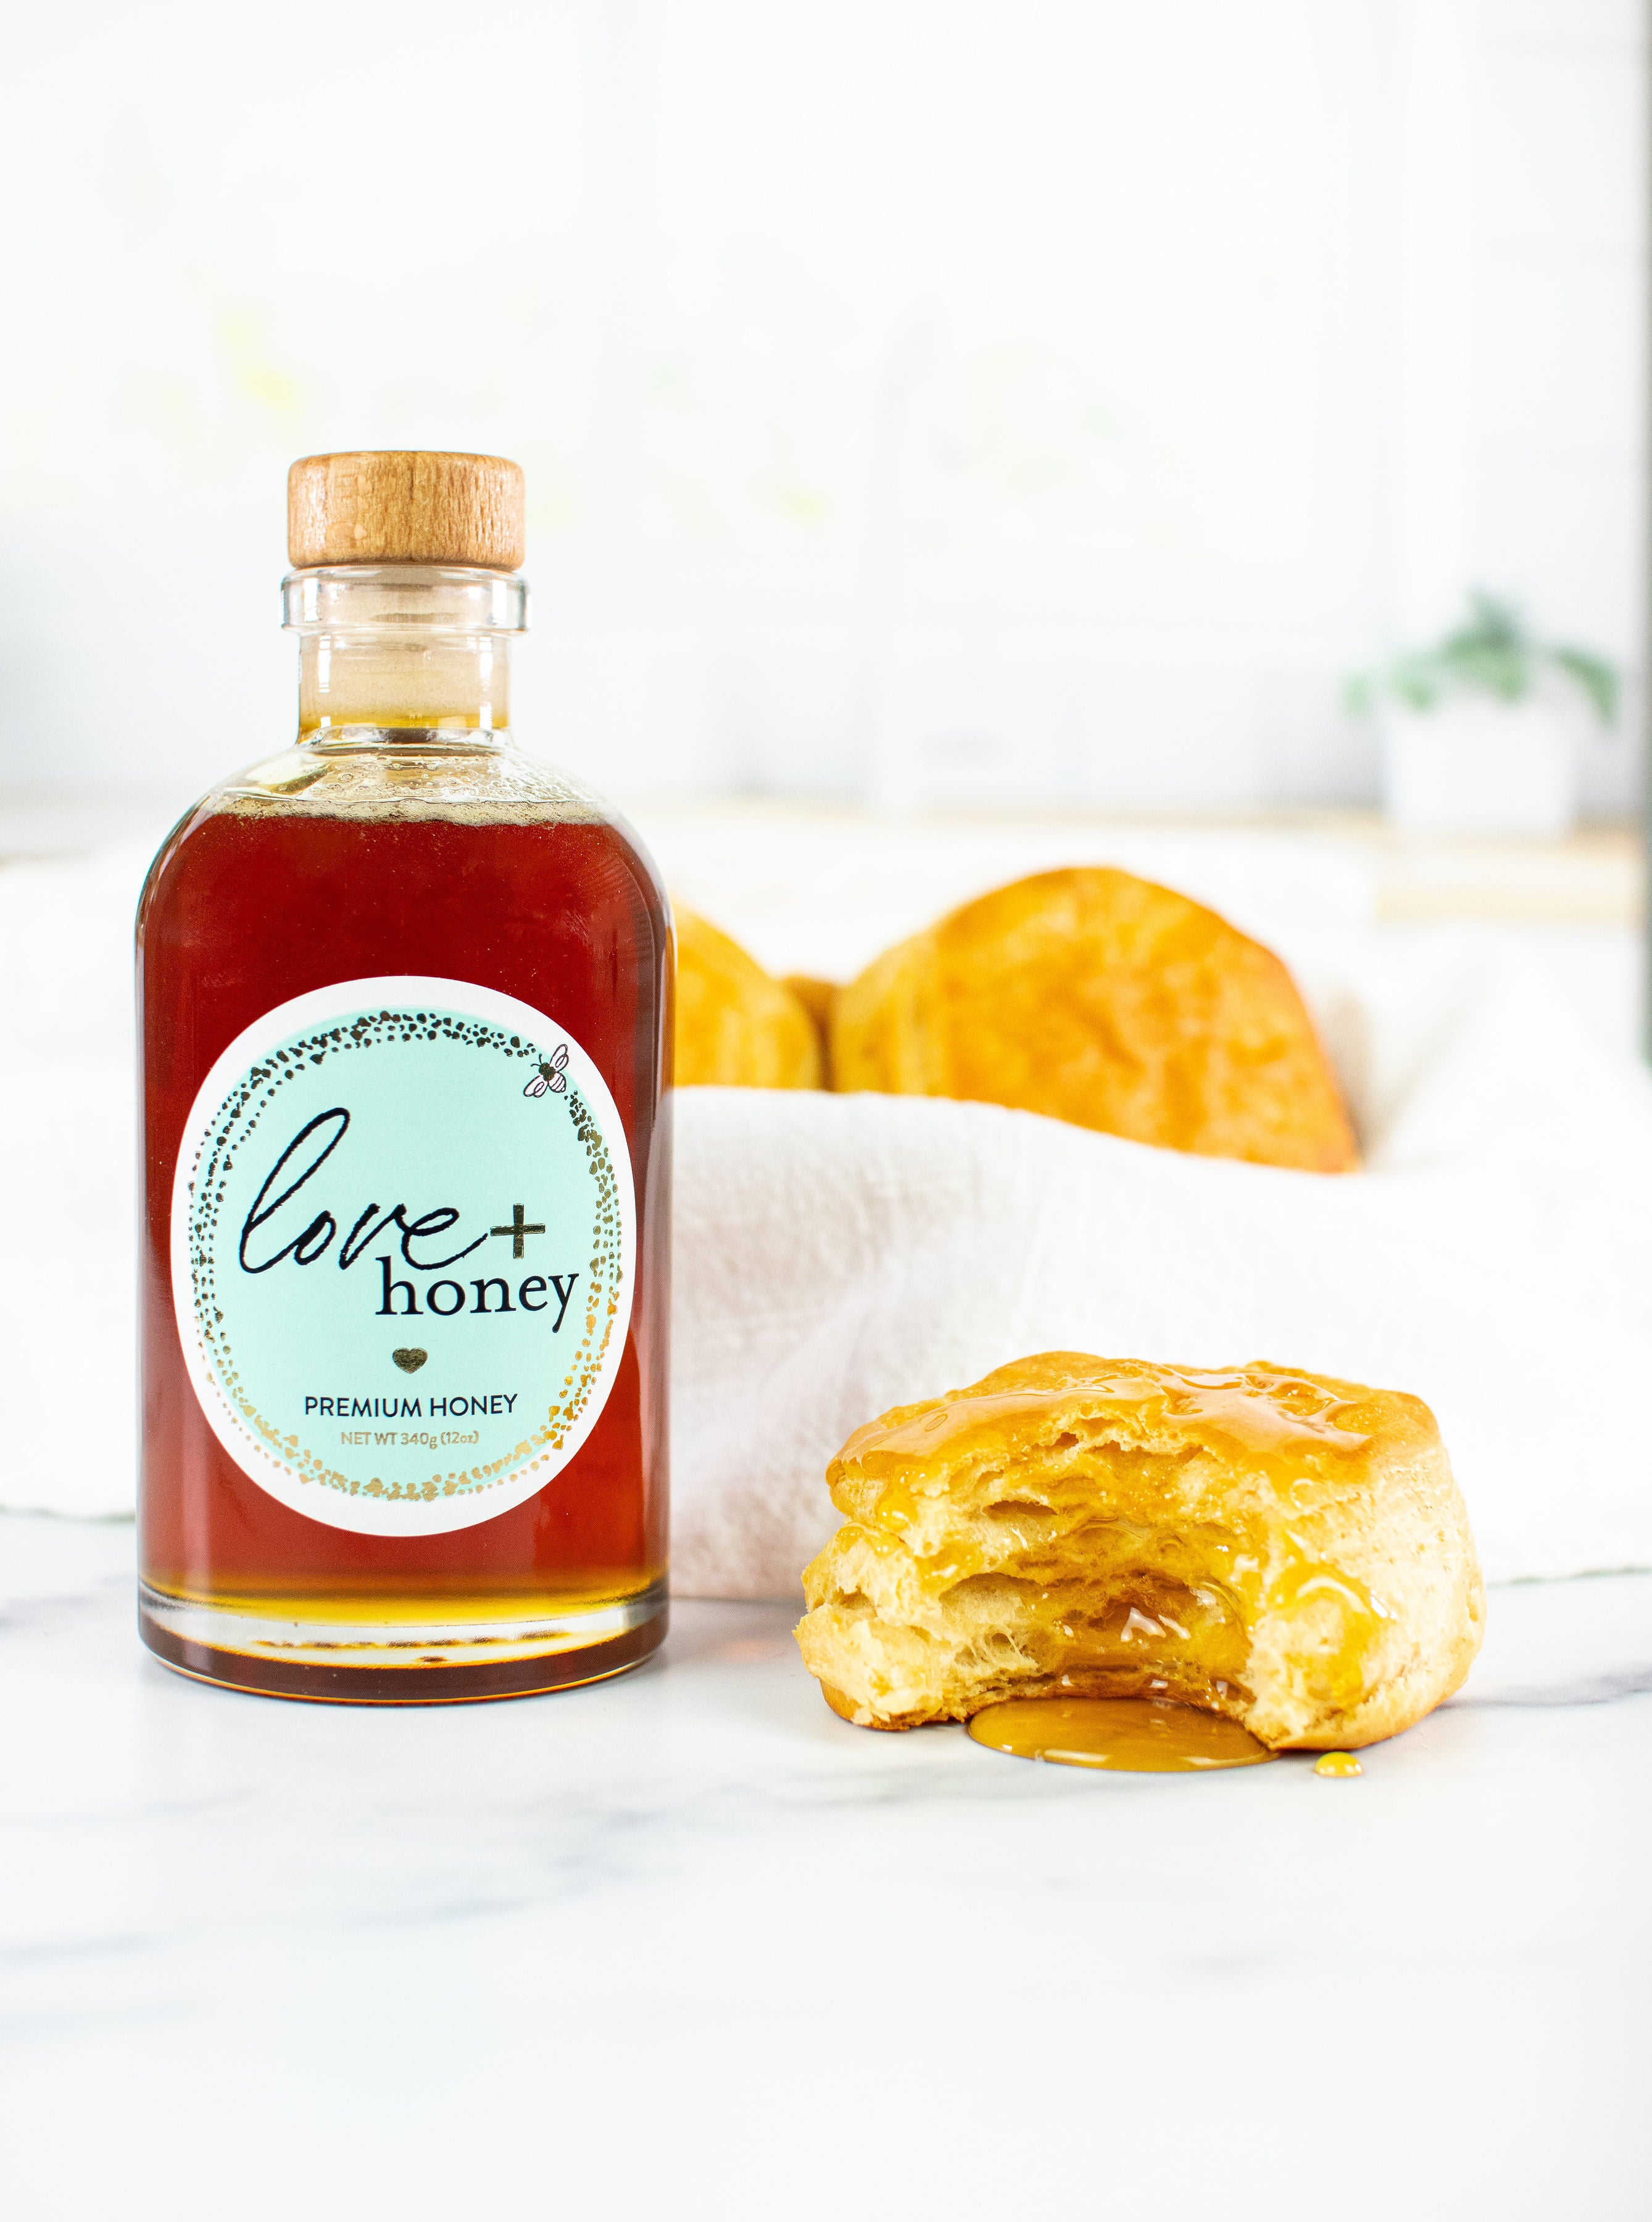 Love Honey – Una Biologicals®